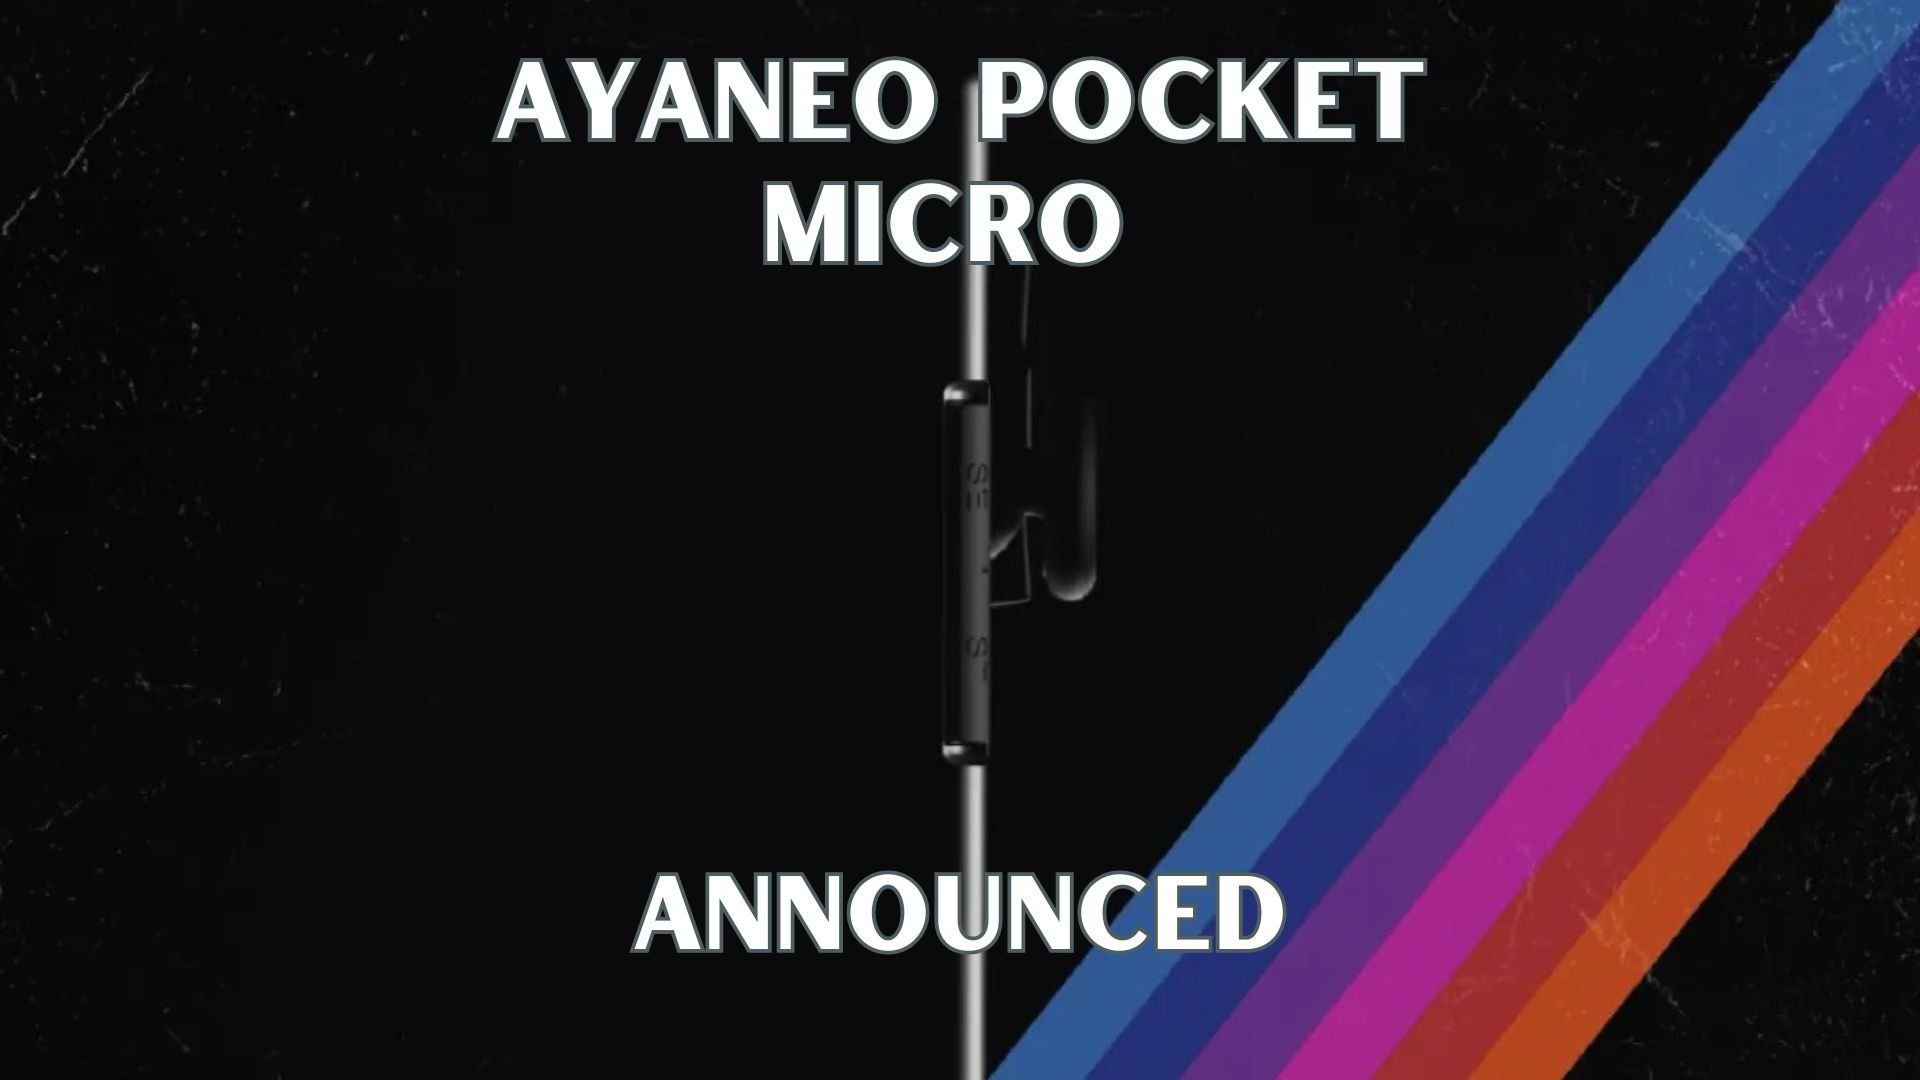 AYANEO Pocket Micro announced – New horizontal retro gaming handheld